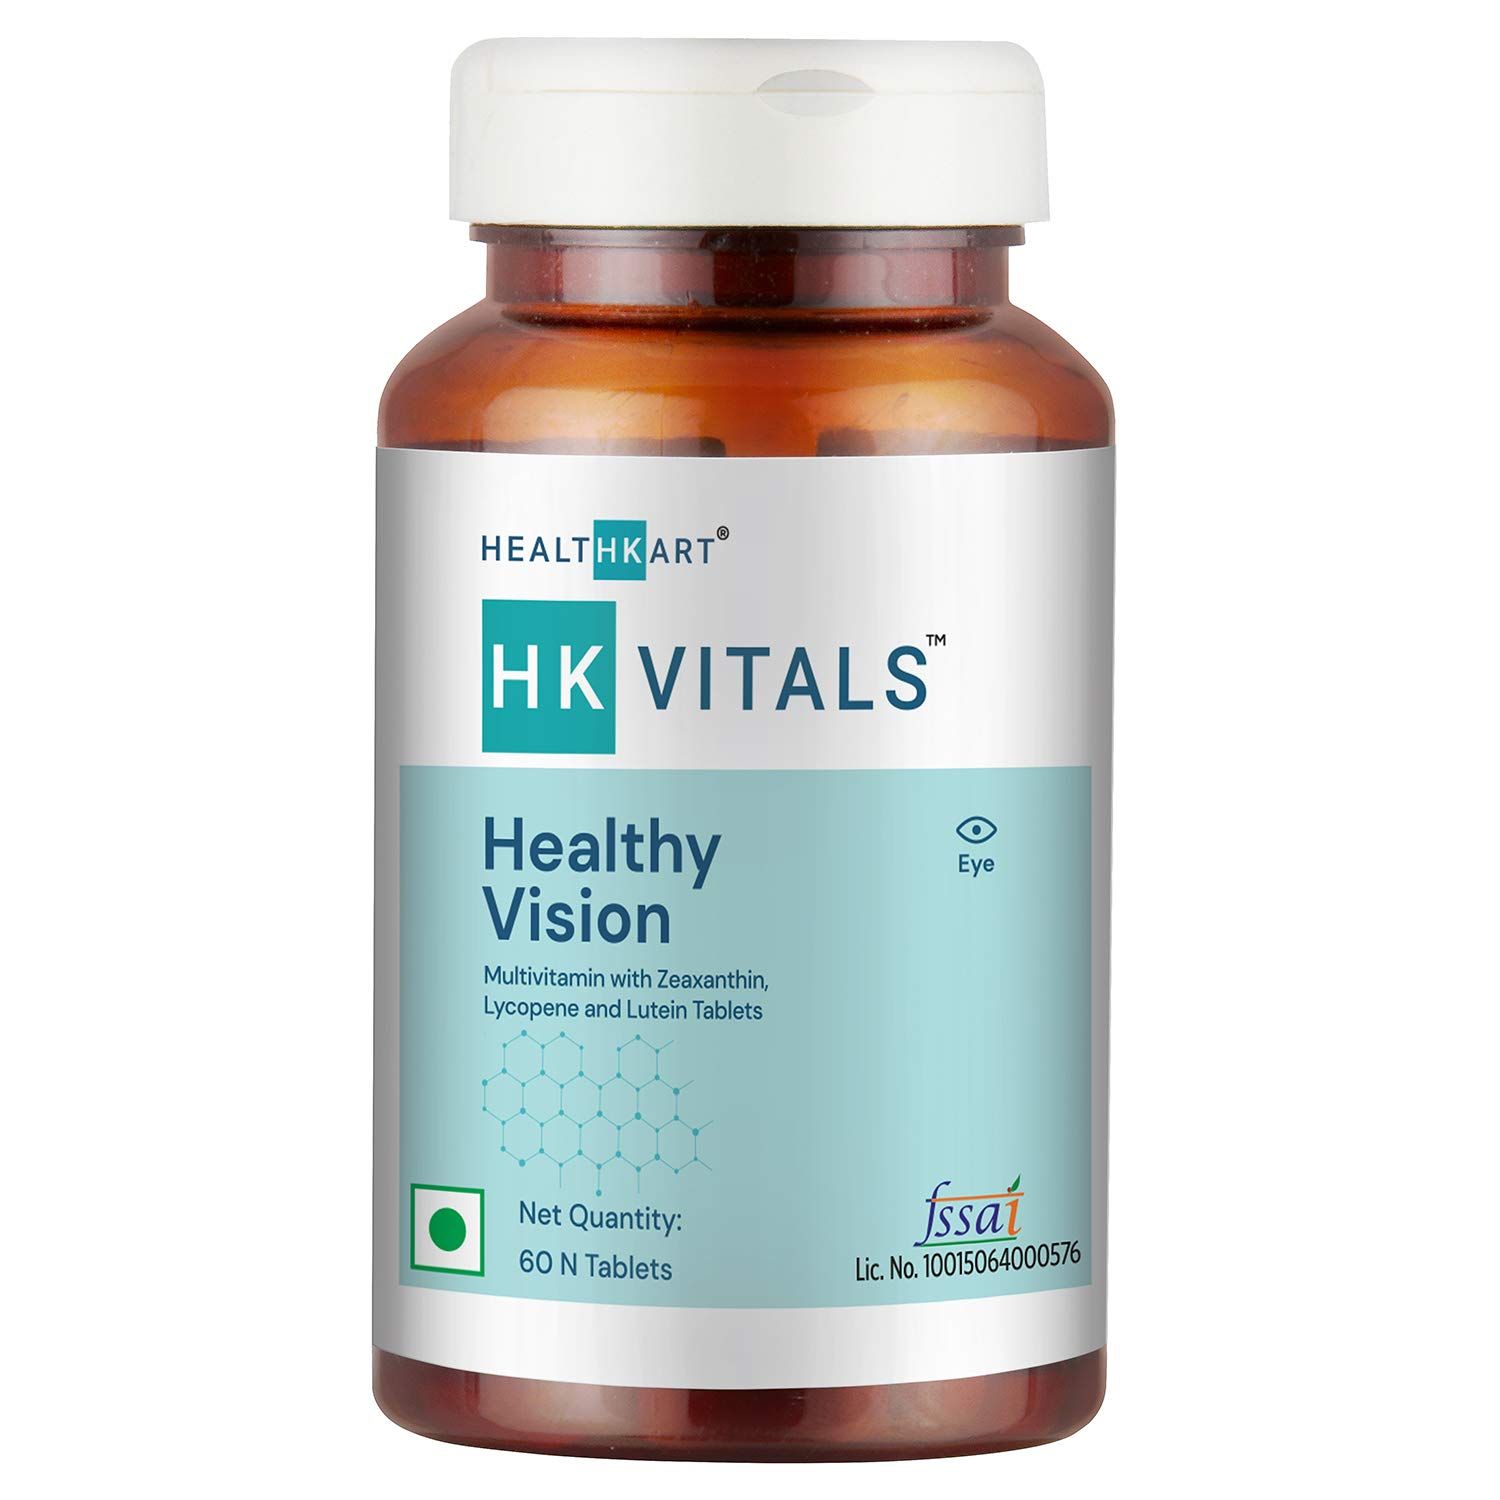 HK Vitals Healthy Vision Supplement Image